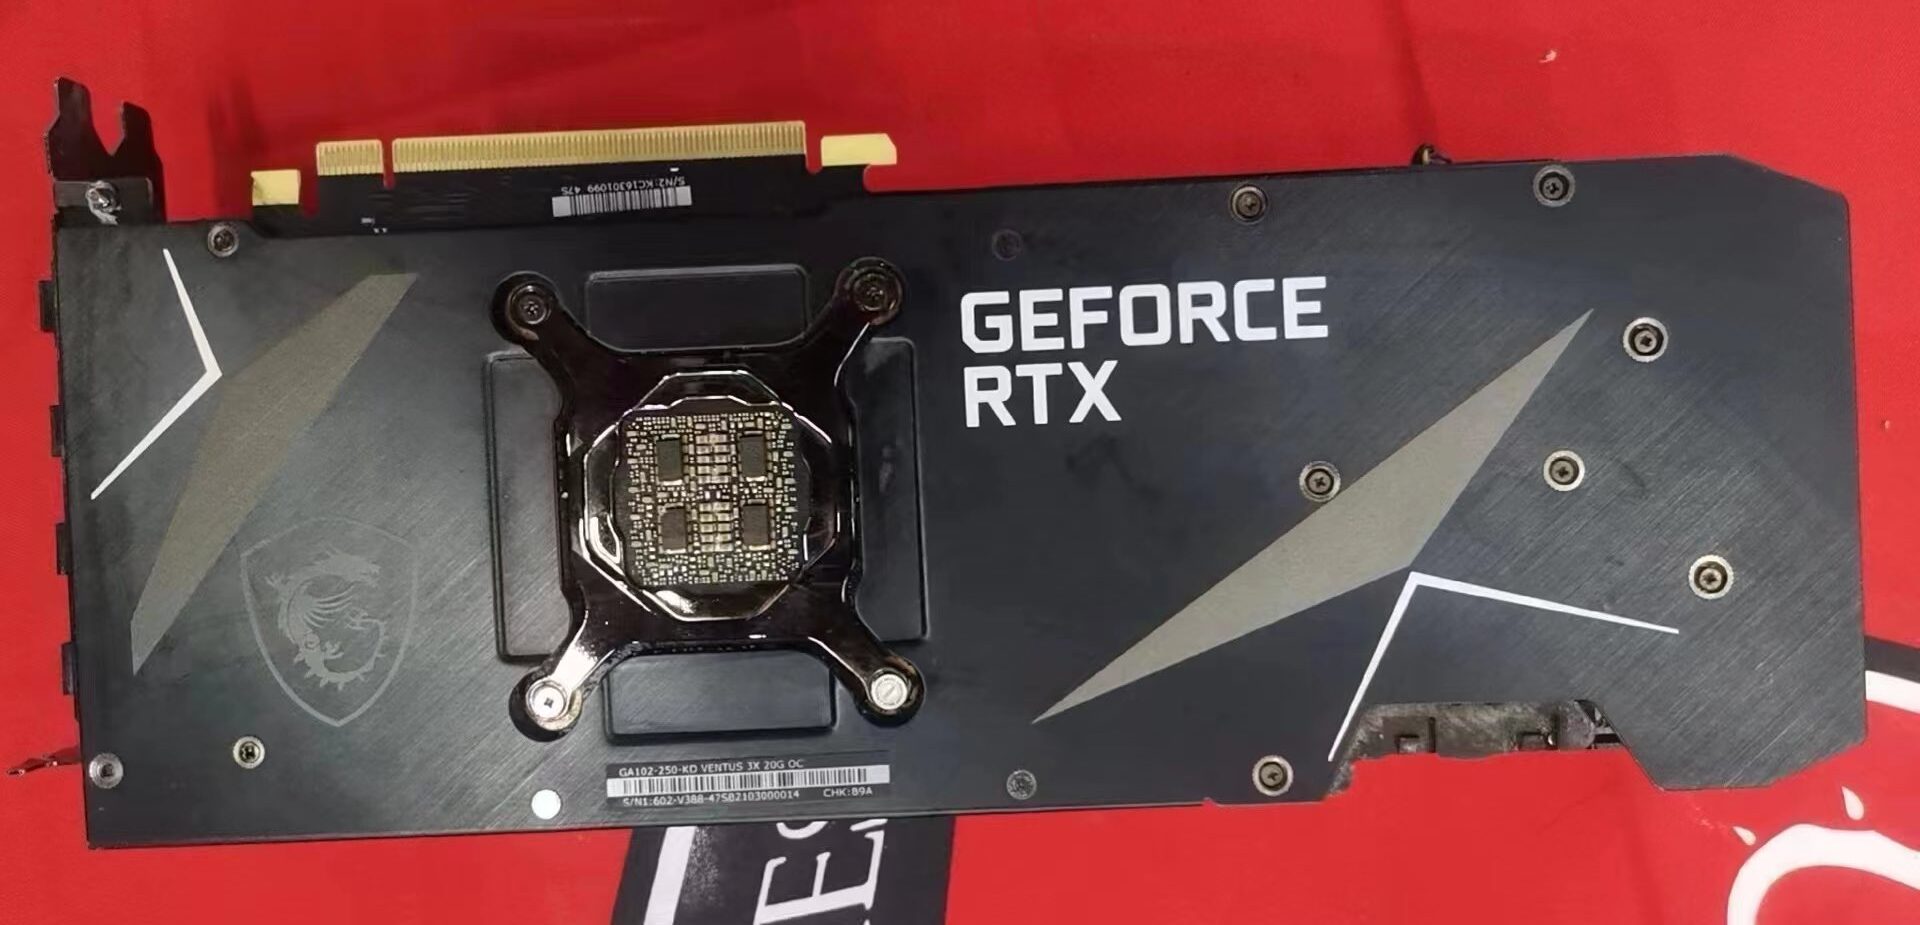 NVIDIA GeForce RTX 3090 Ti 20 GB